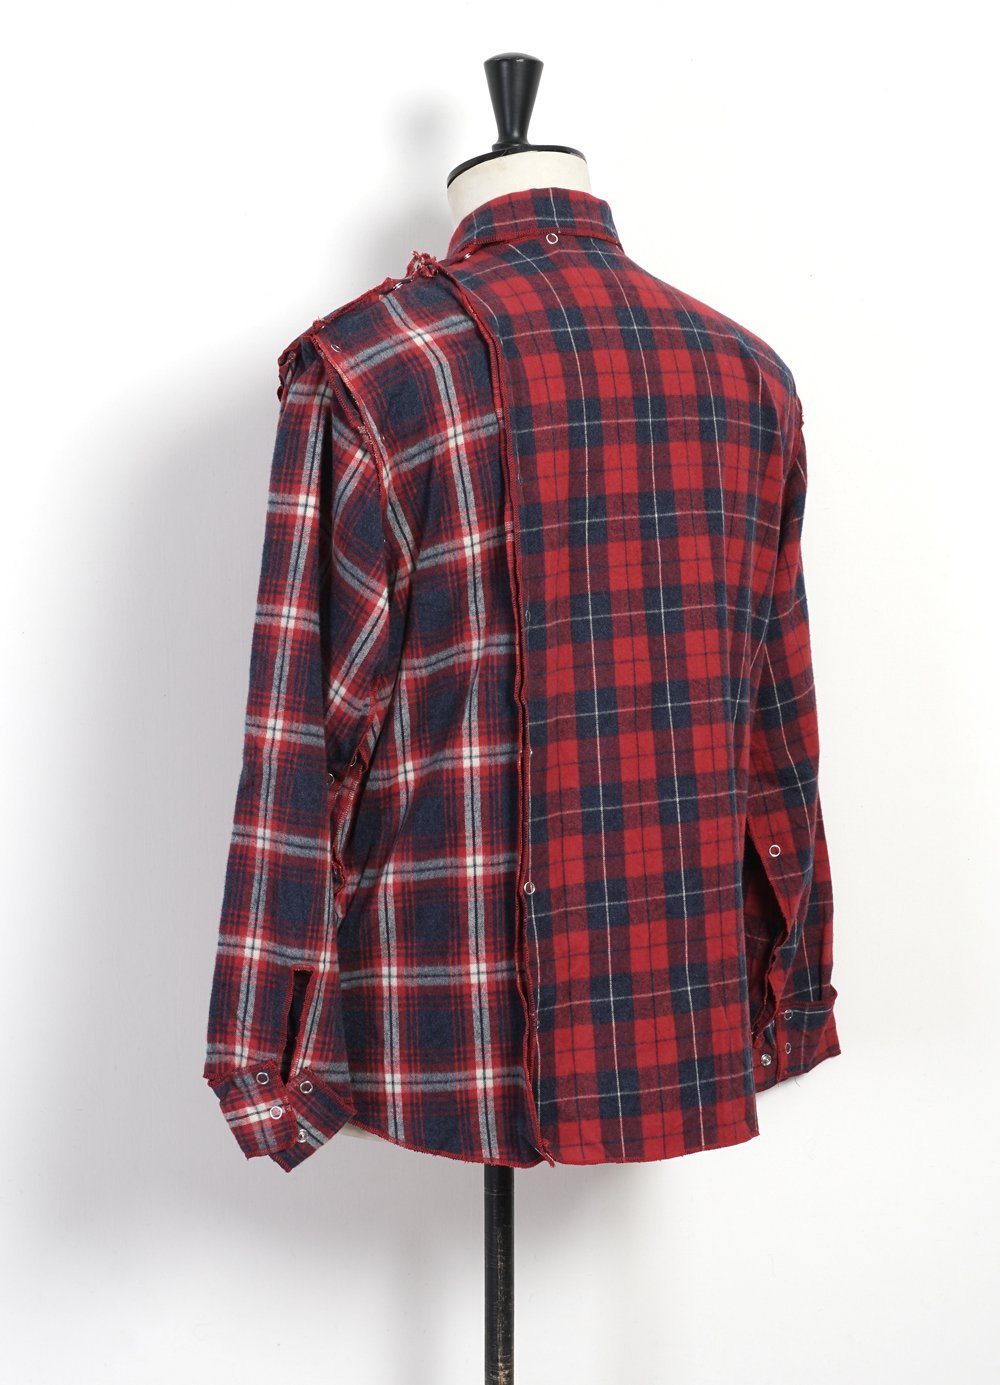 MOUNTAIN RESEARCH - NO SEW SHIRT | Red Checkered - HANSEN Garments